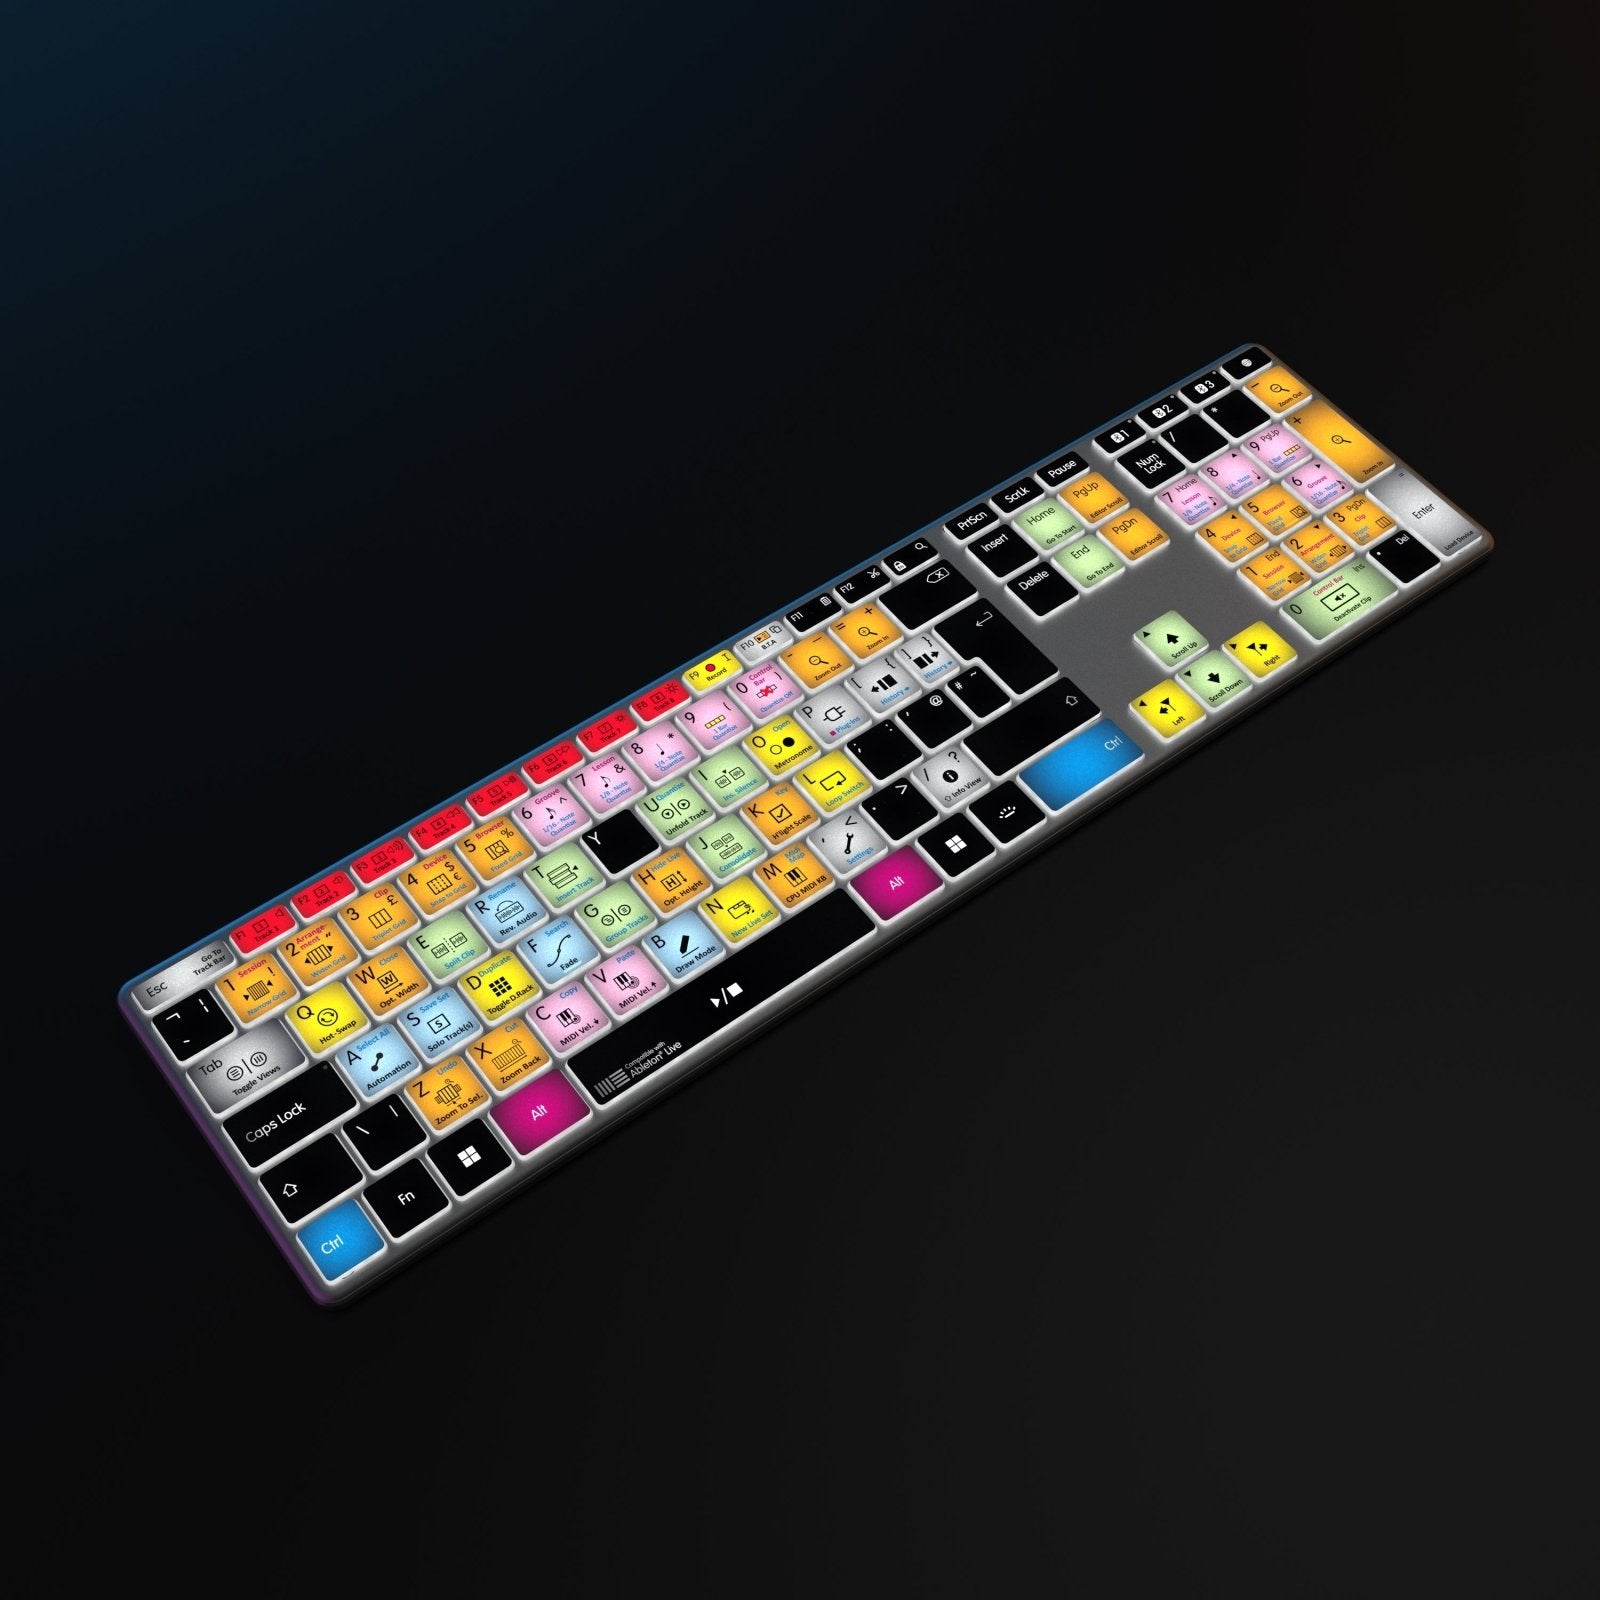 NEW Ableton Live Keyboard | Backlit & Wireless | Windows UK Layout